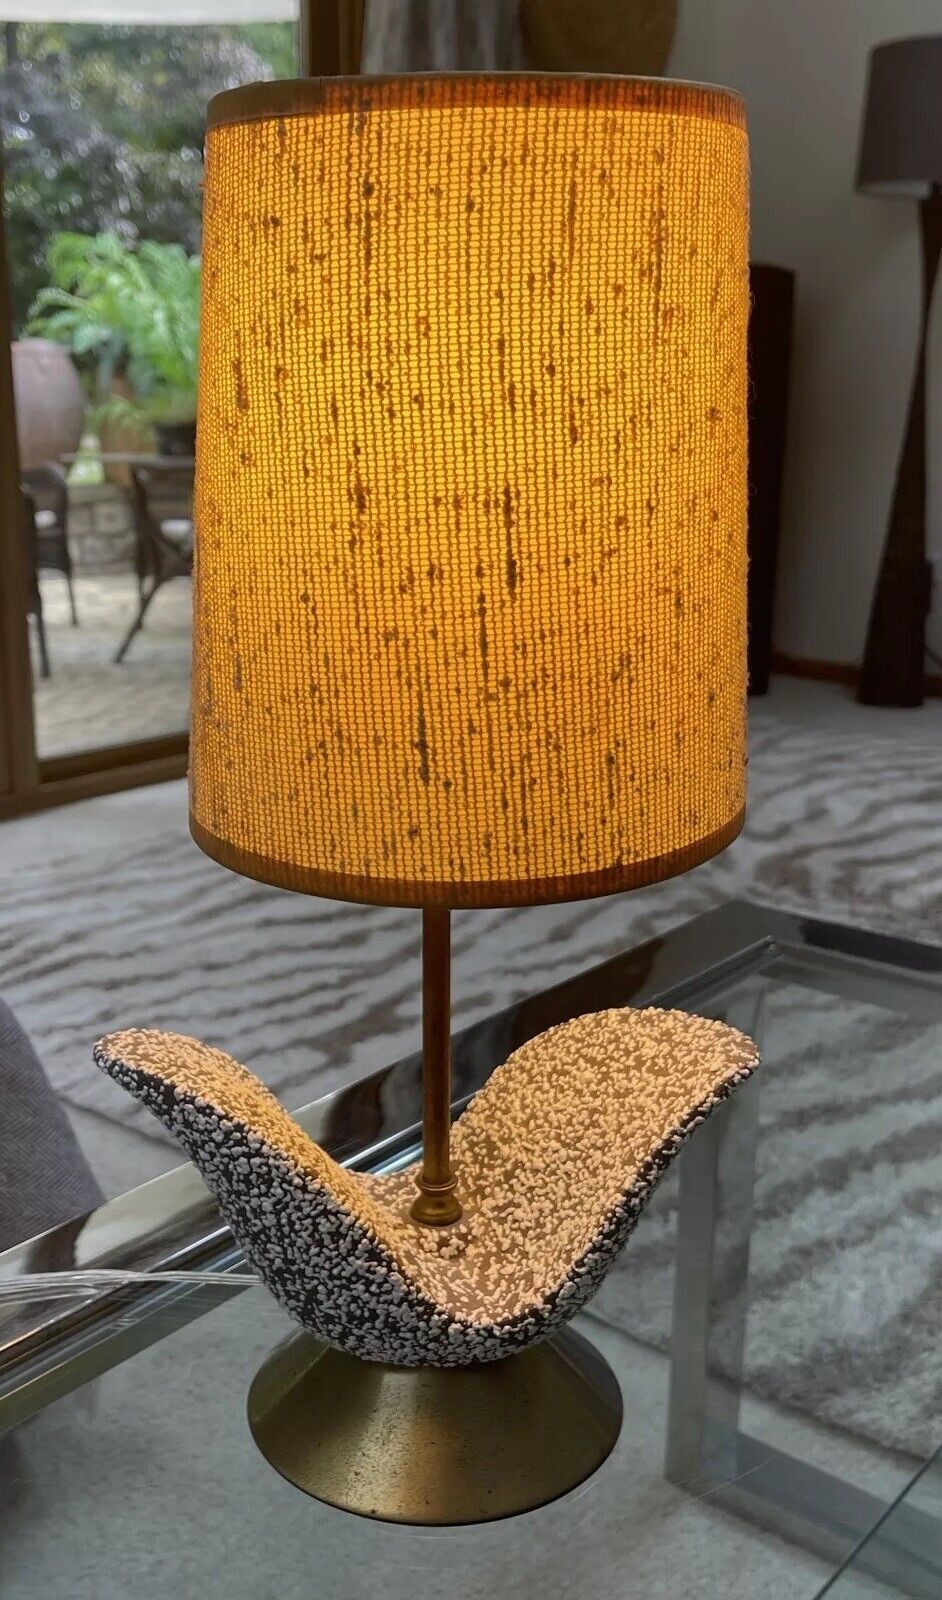 VTG Mid-Century Modern Popcorn Ceramic Glaze Brown White Lace Unique Table Lamp